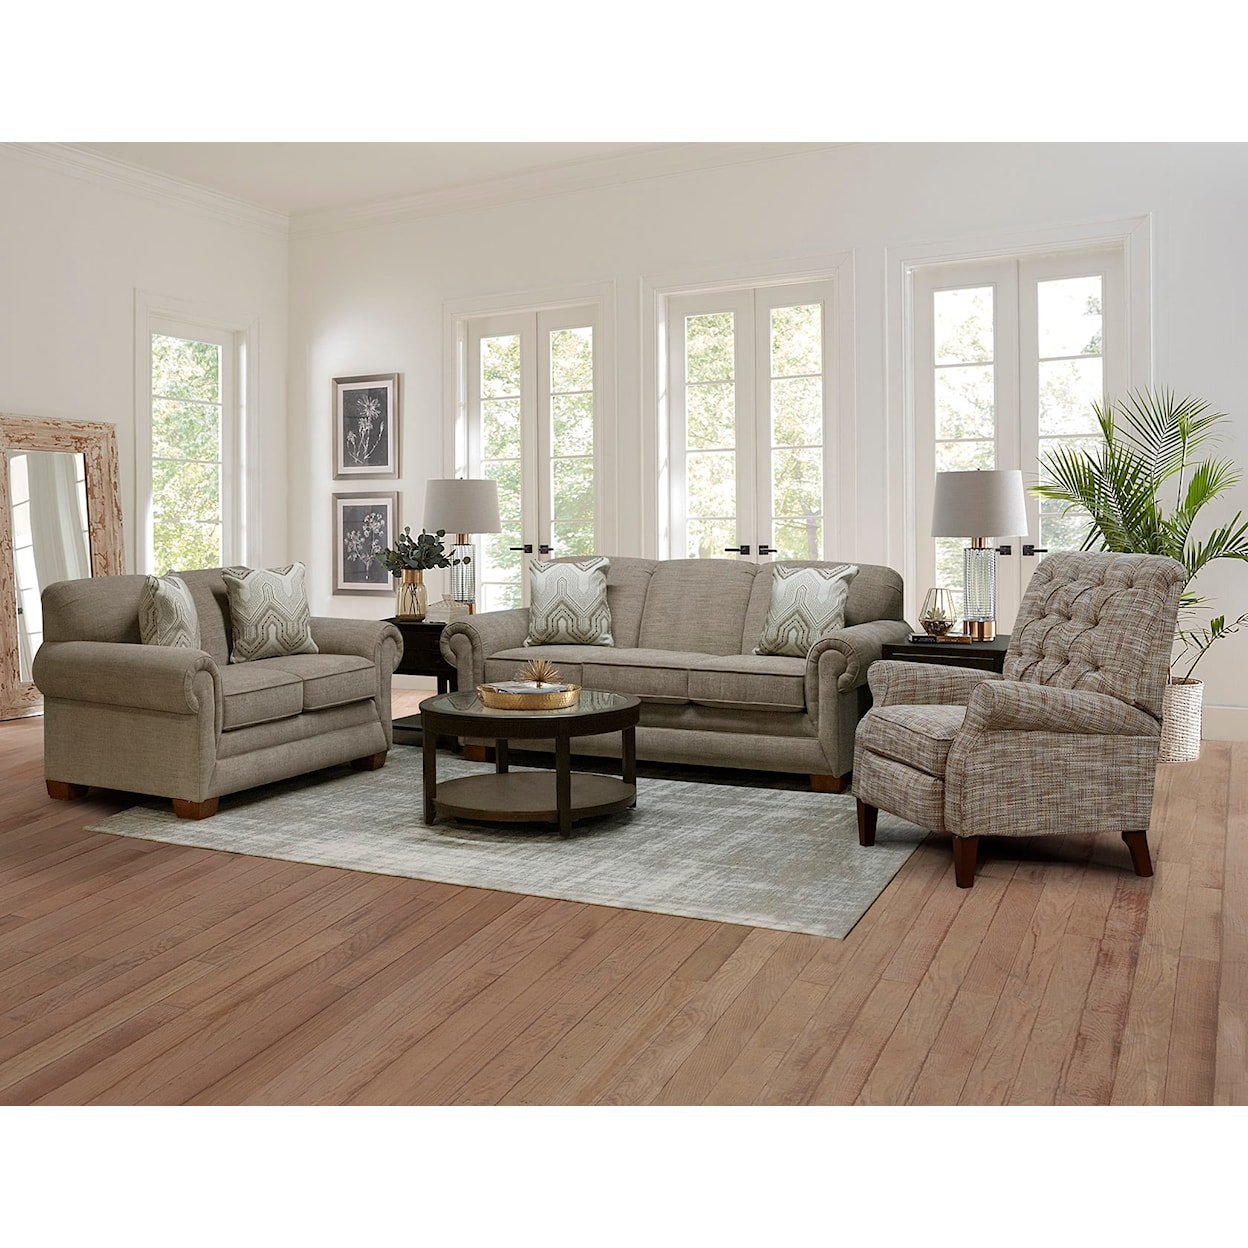 England 1430R/LSR Series Upholstered Sofa